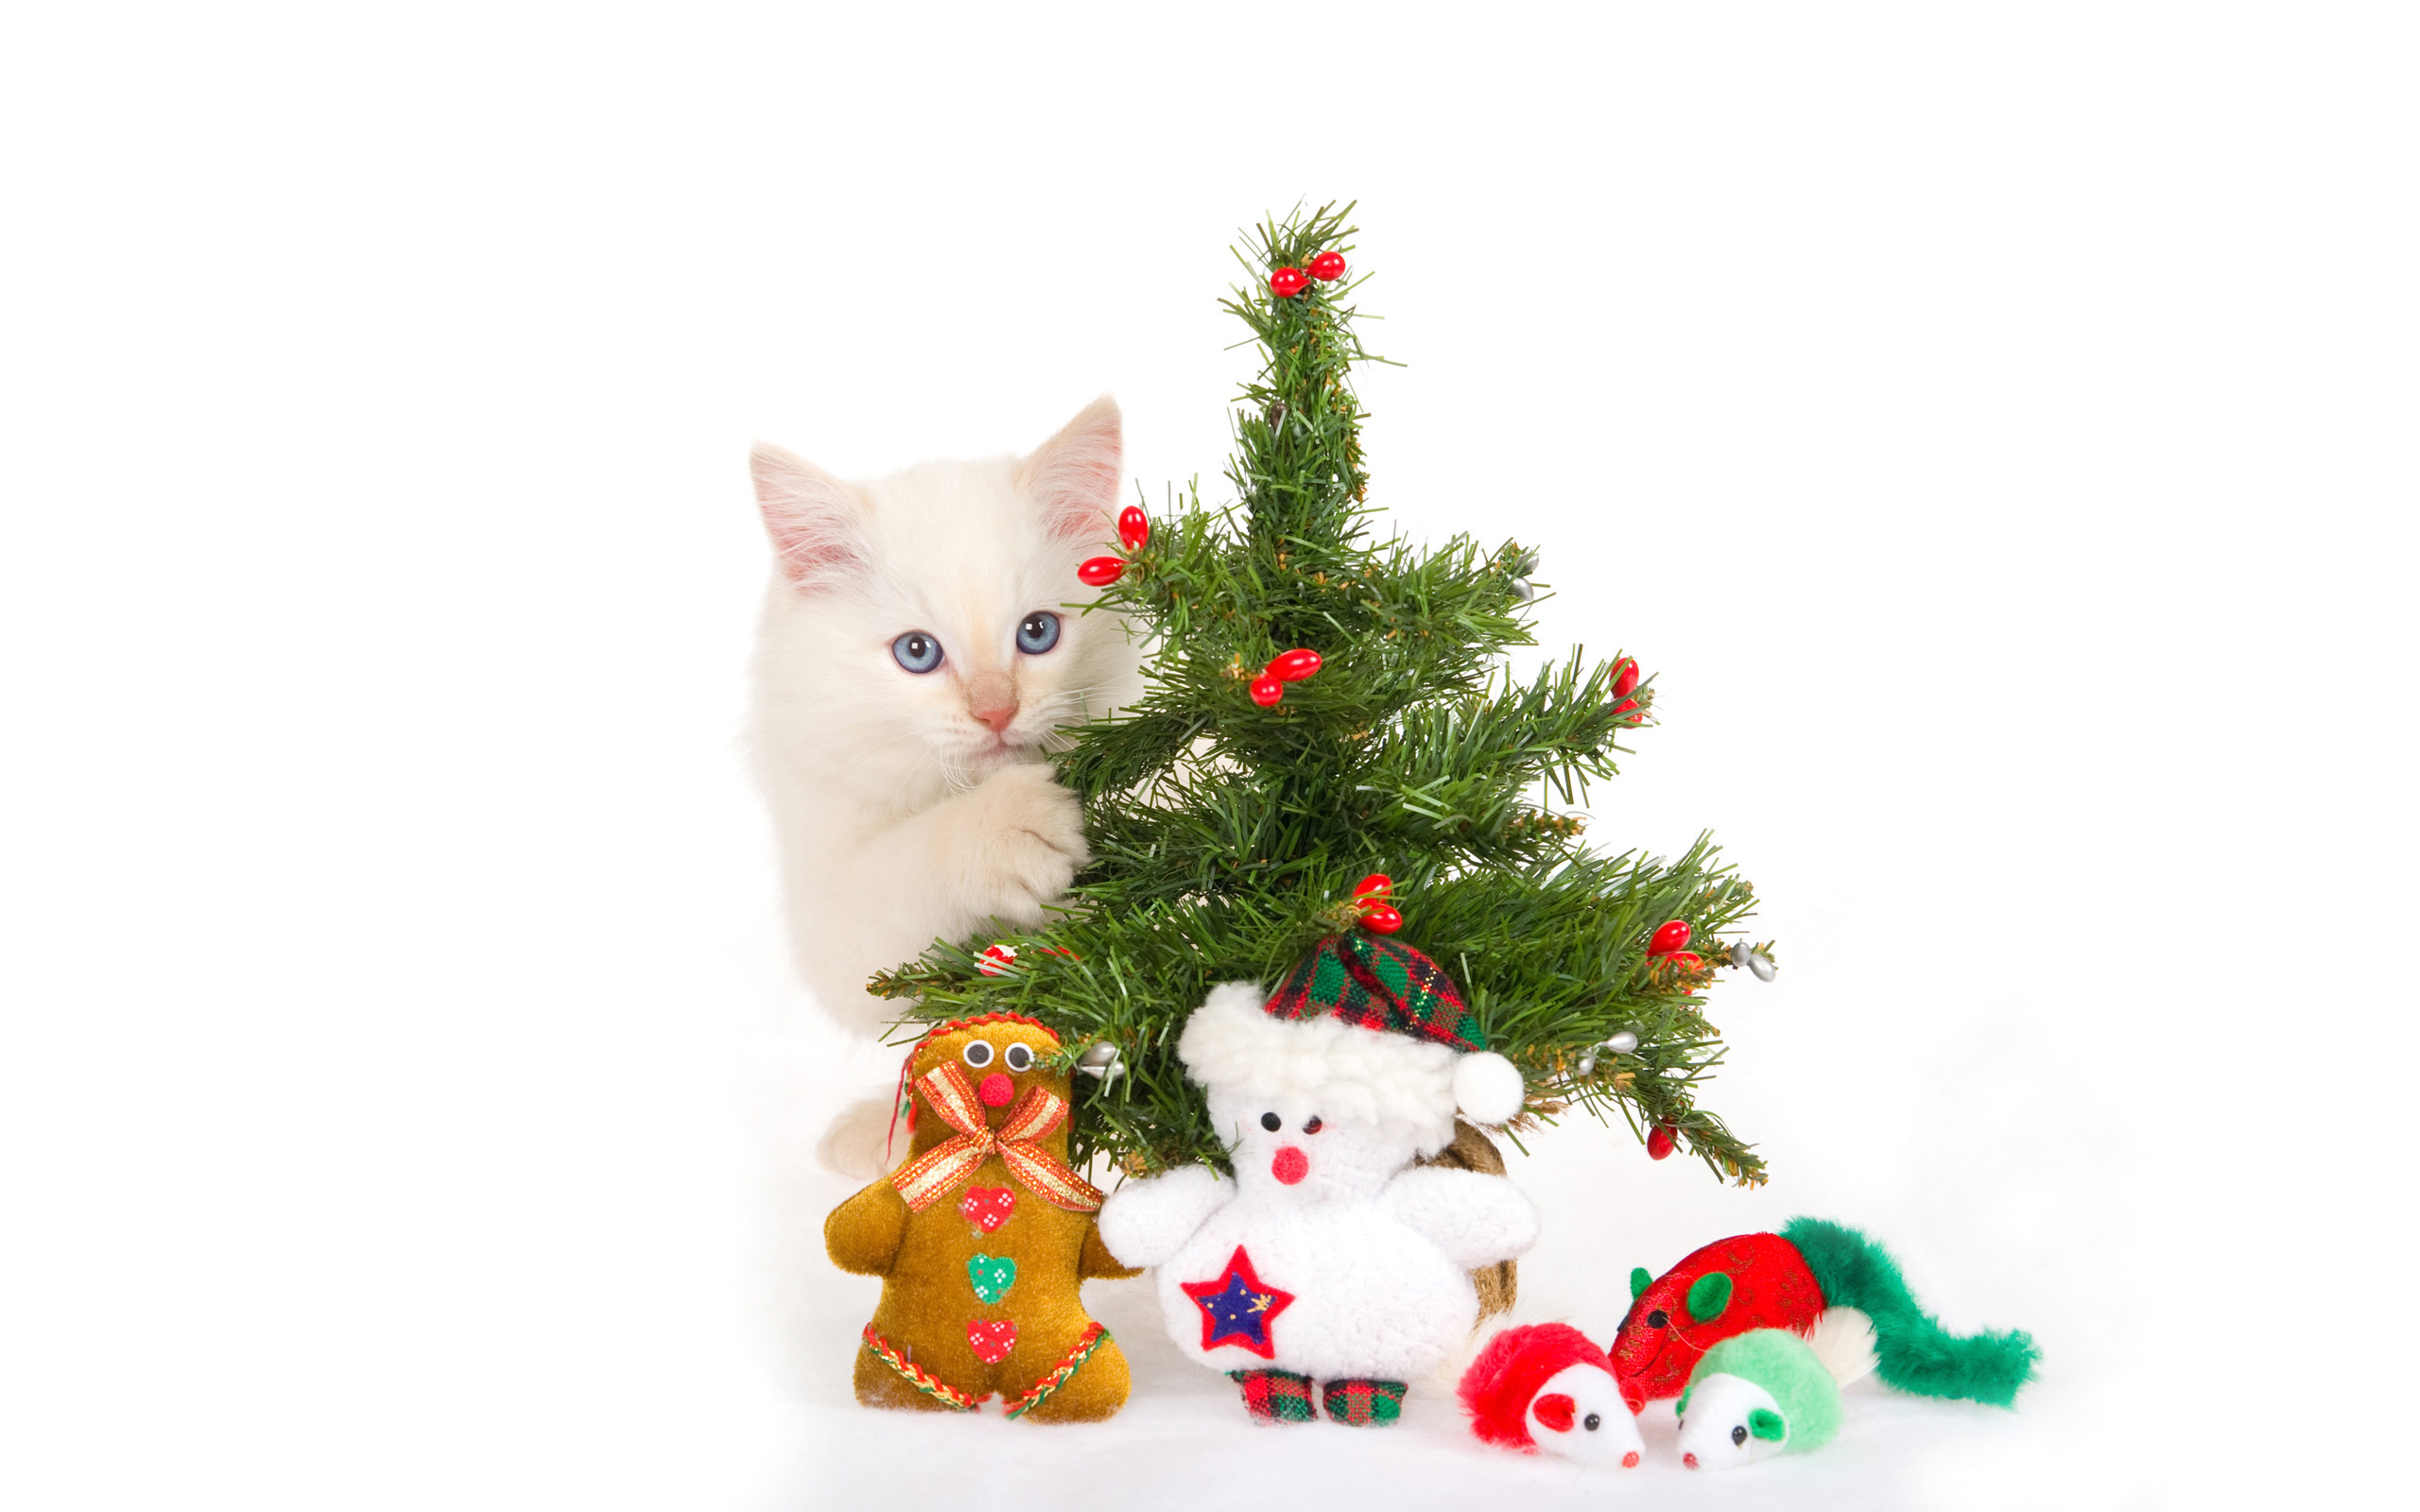 animals, holidays, cats, new year, toys, fir-trees, christmas, xmas phone wallpaper